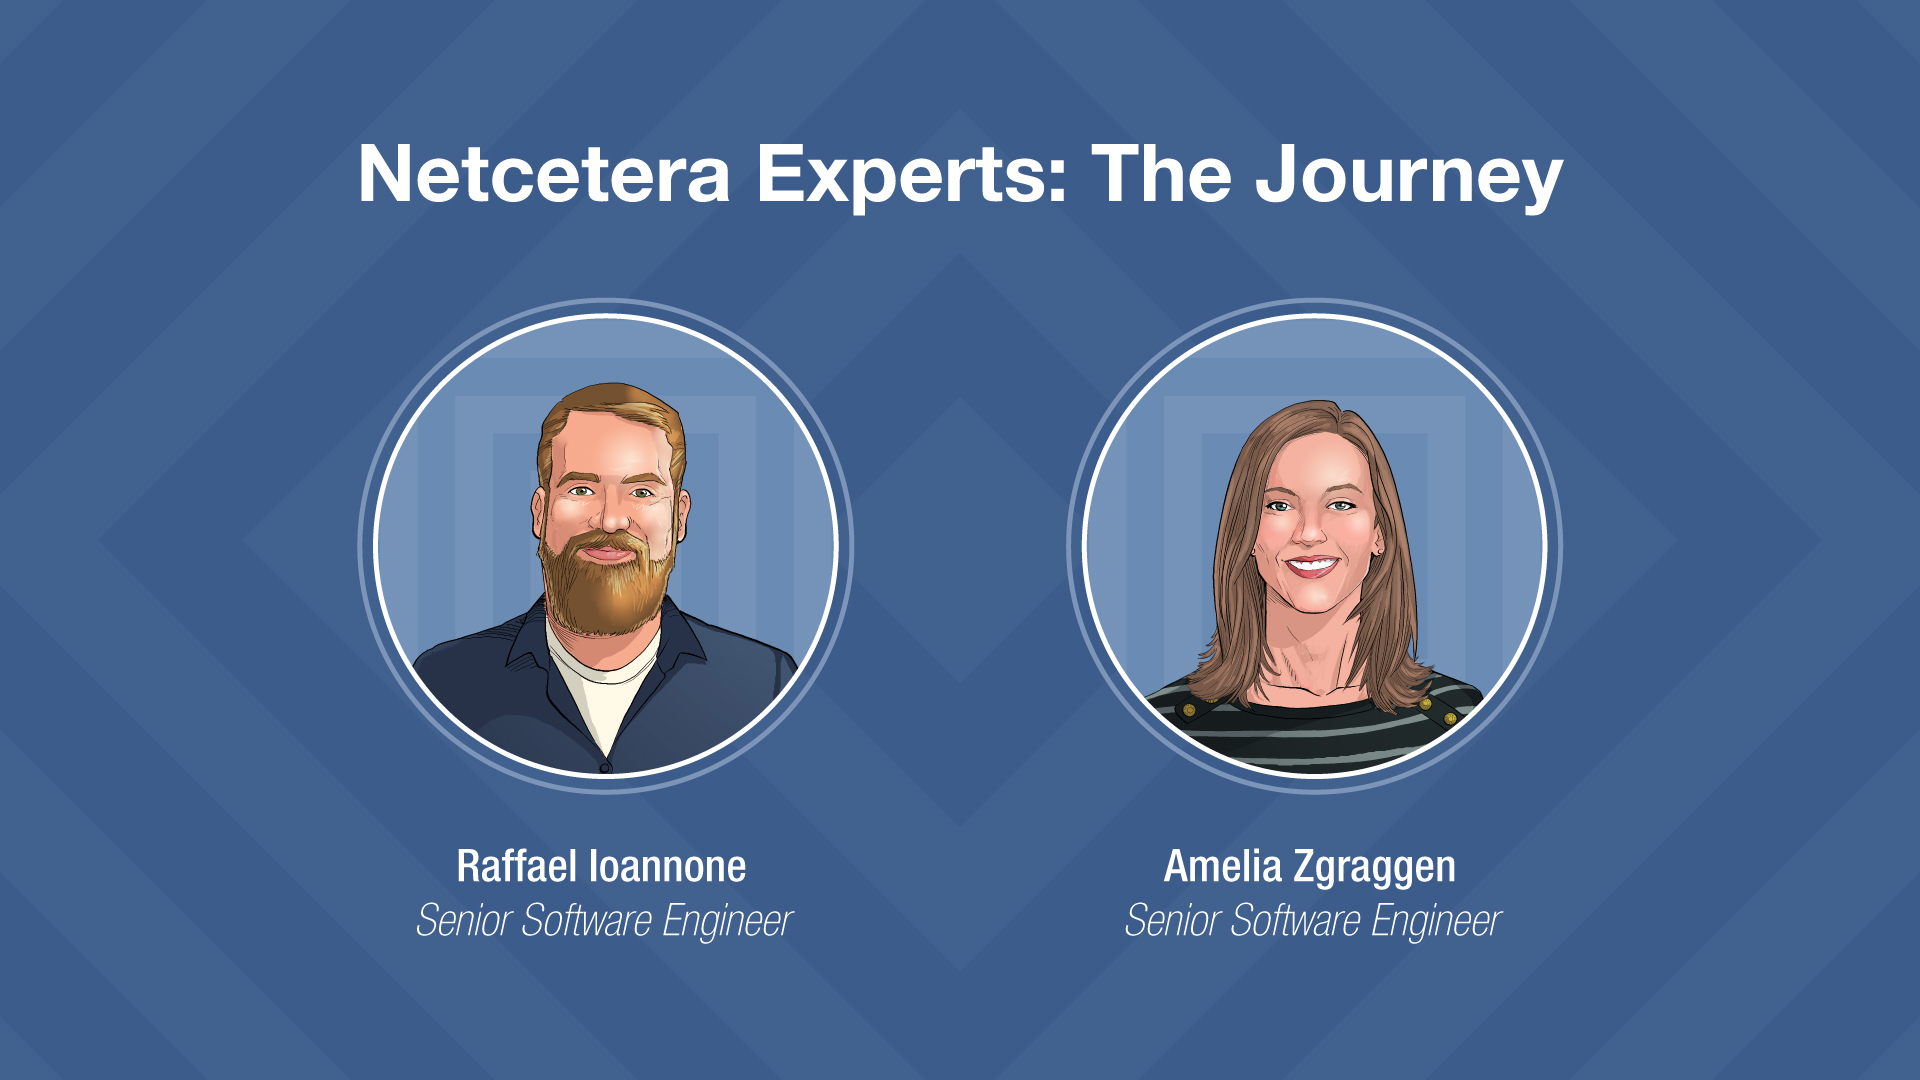 Netcetera Experts: The Journey - Bringing closer Netceterians journeys